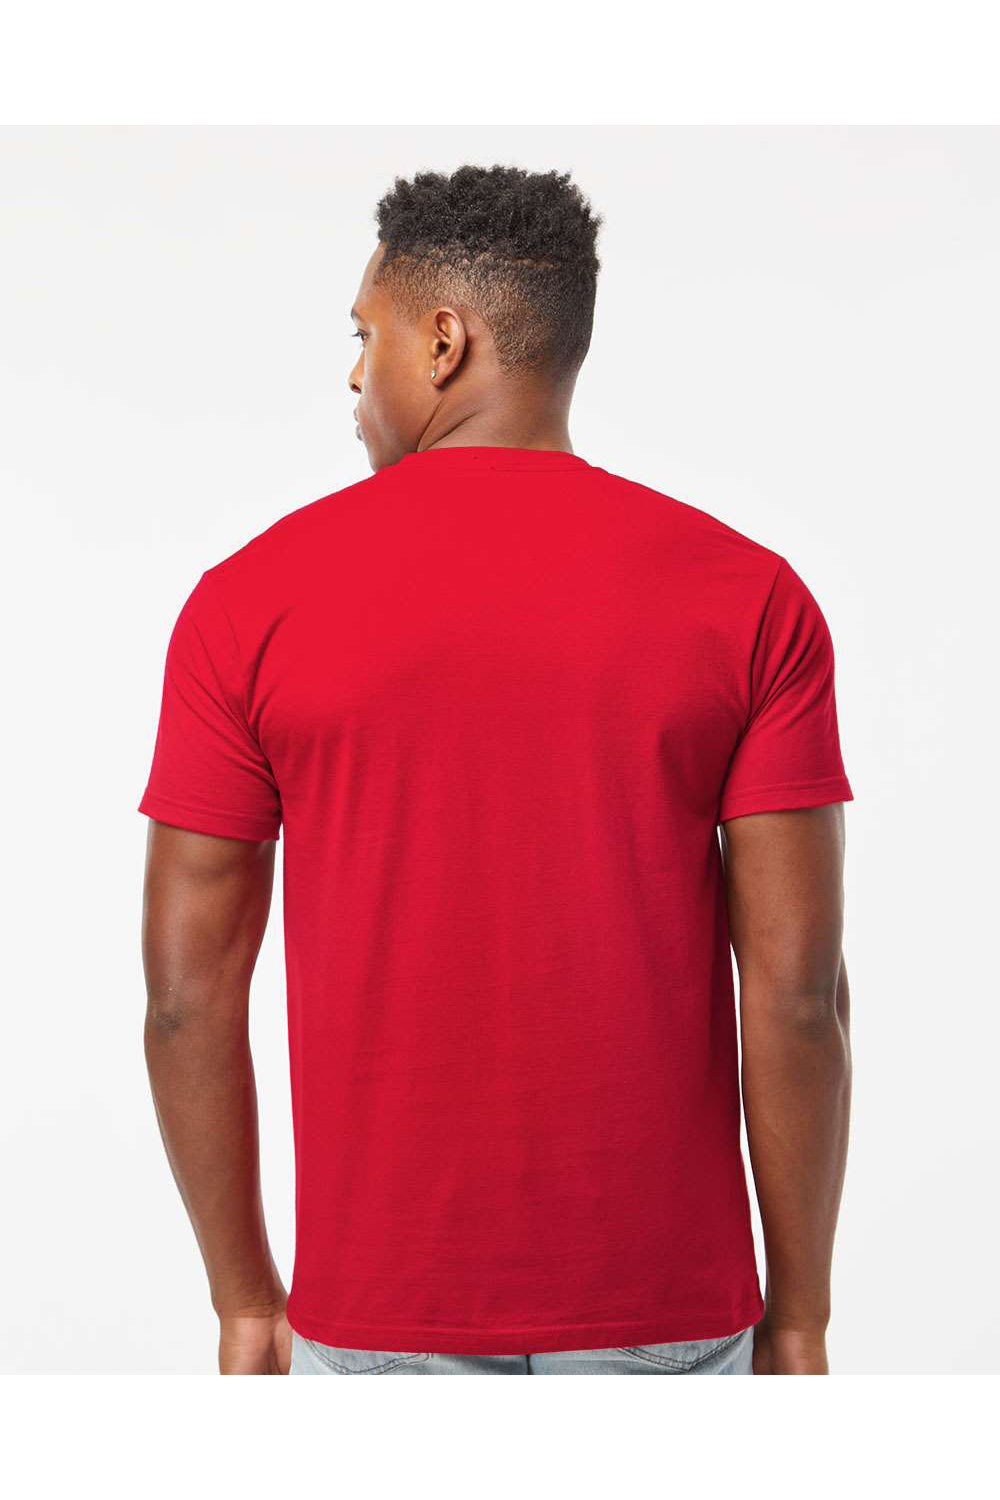 Tultex 290 Mens Jersey Short Sleeve Crewneck T-Shirt Cardinal Red Model Back